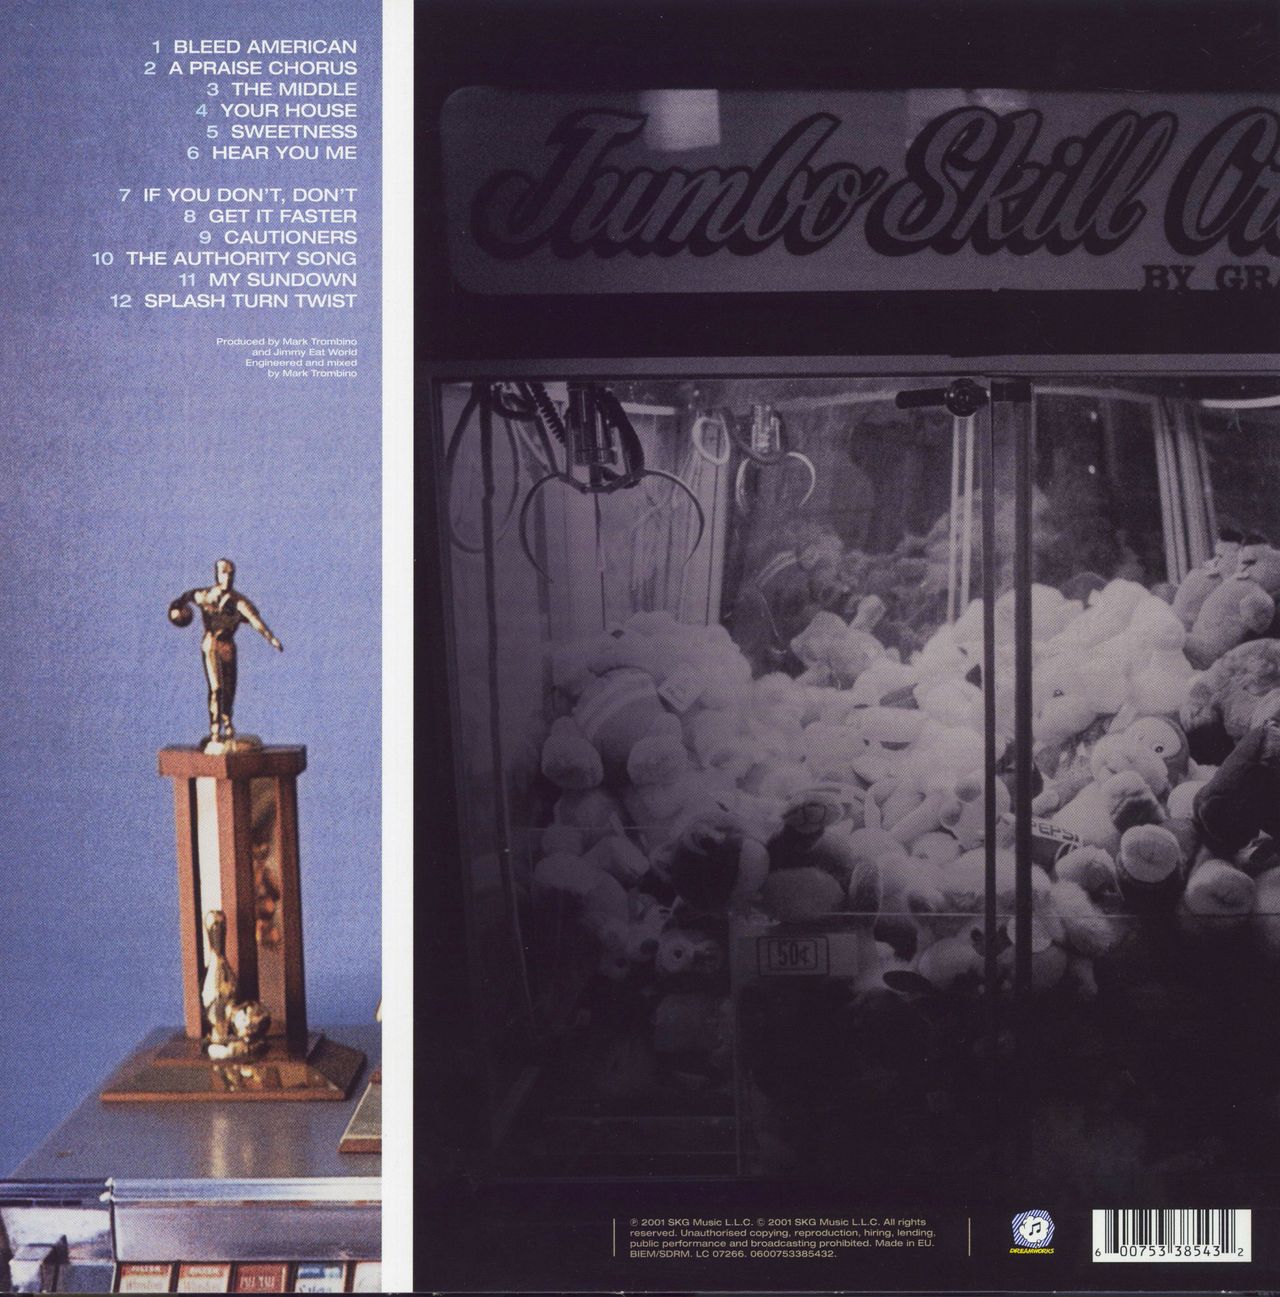 Jimmy Eat World Bleed American - 180gram UK Vinyl LP — RareVinyl.com